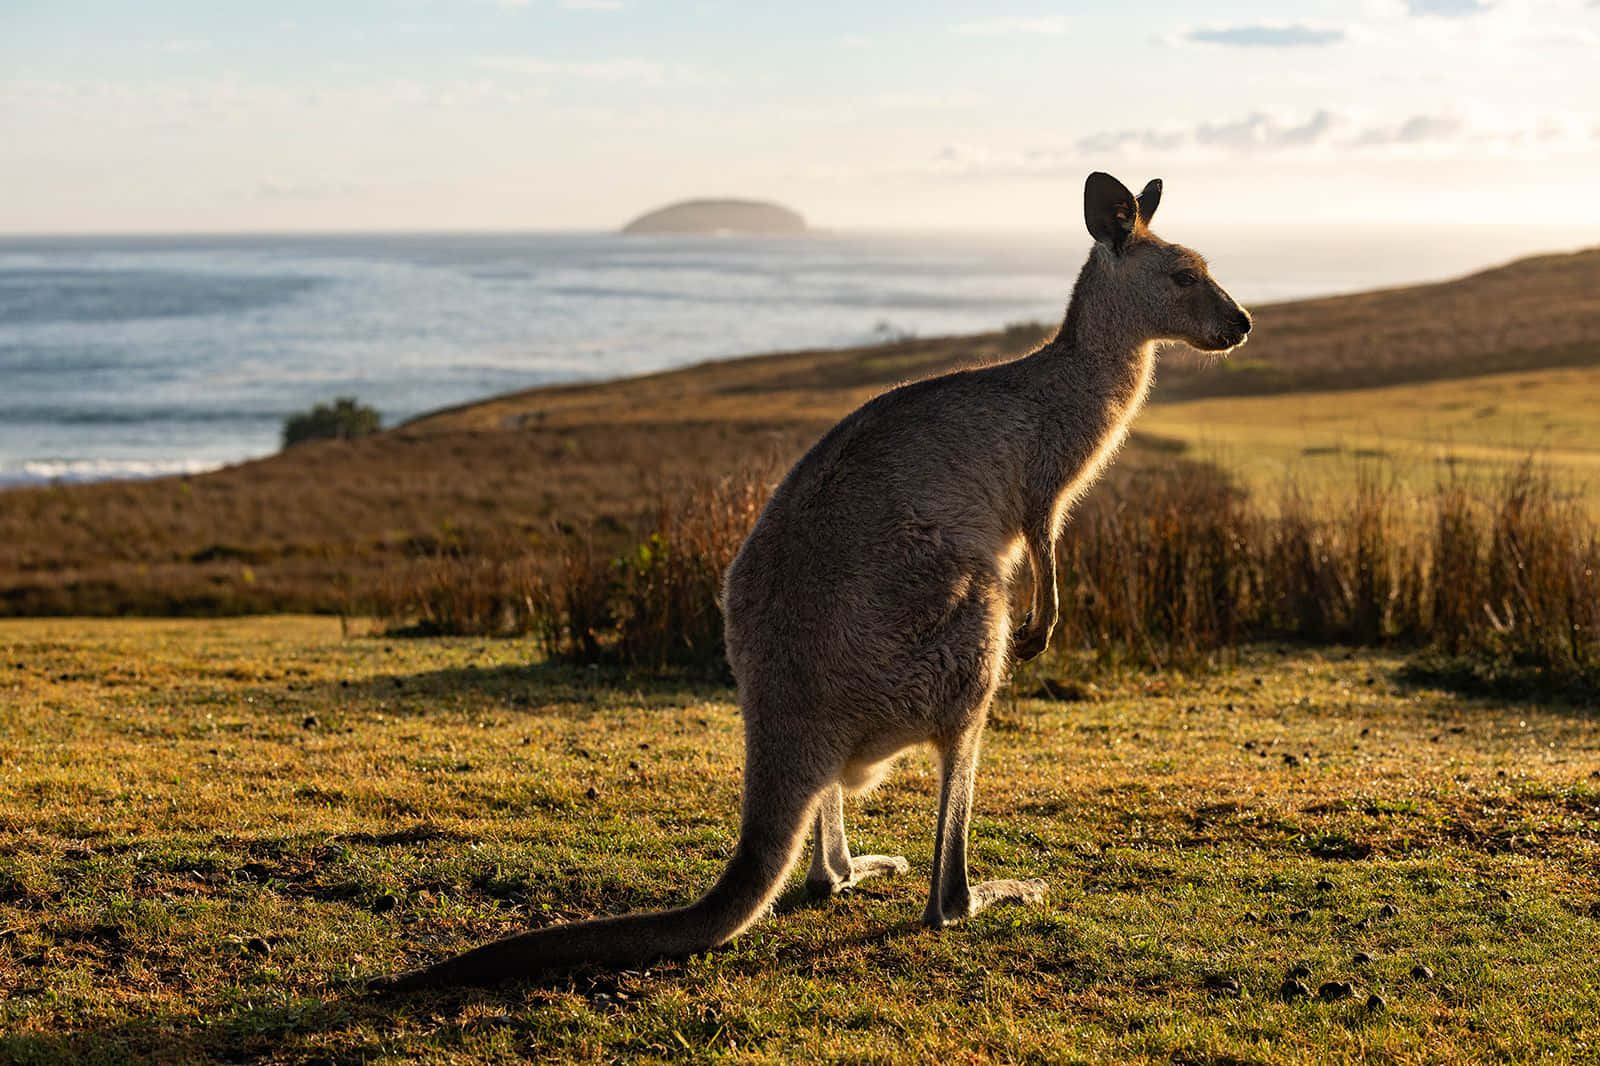 A kangaroo jumps across Australia's Outback